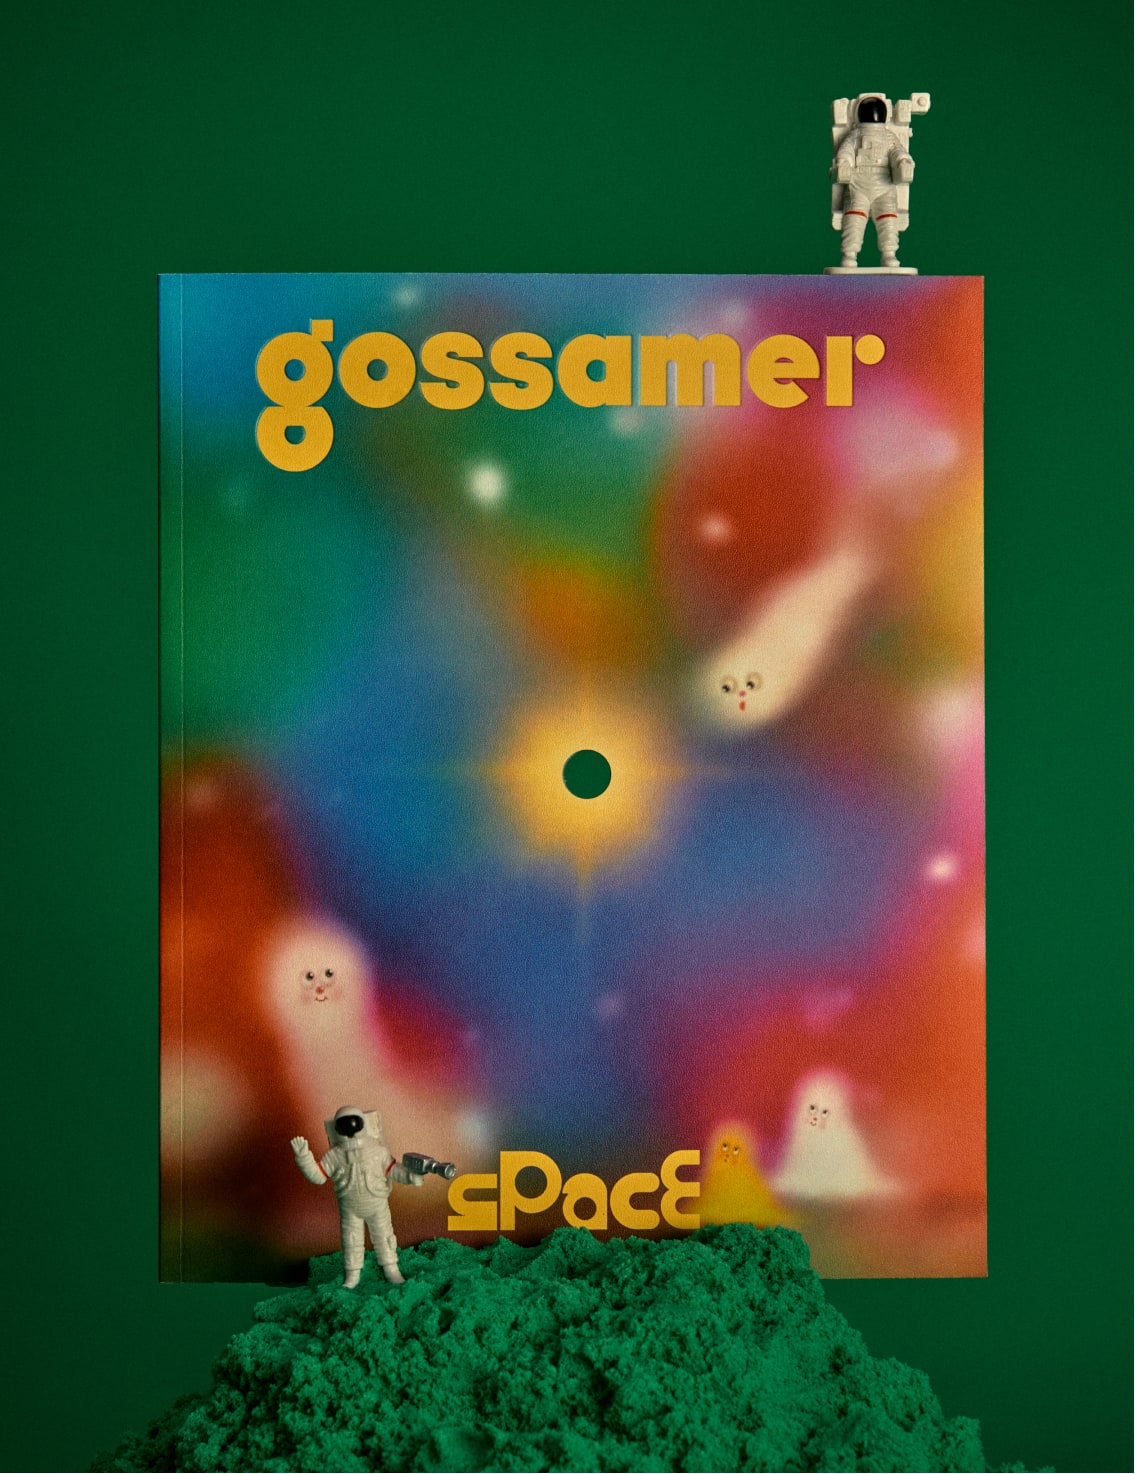 gossamer_space13